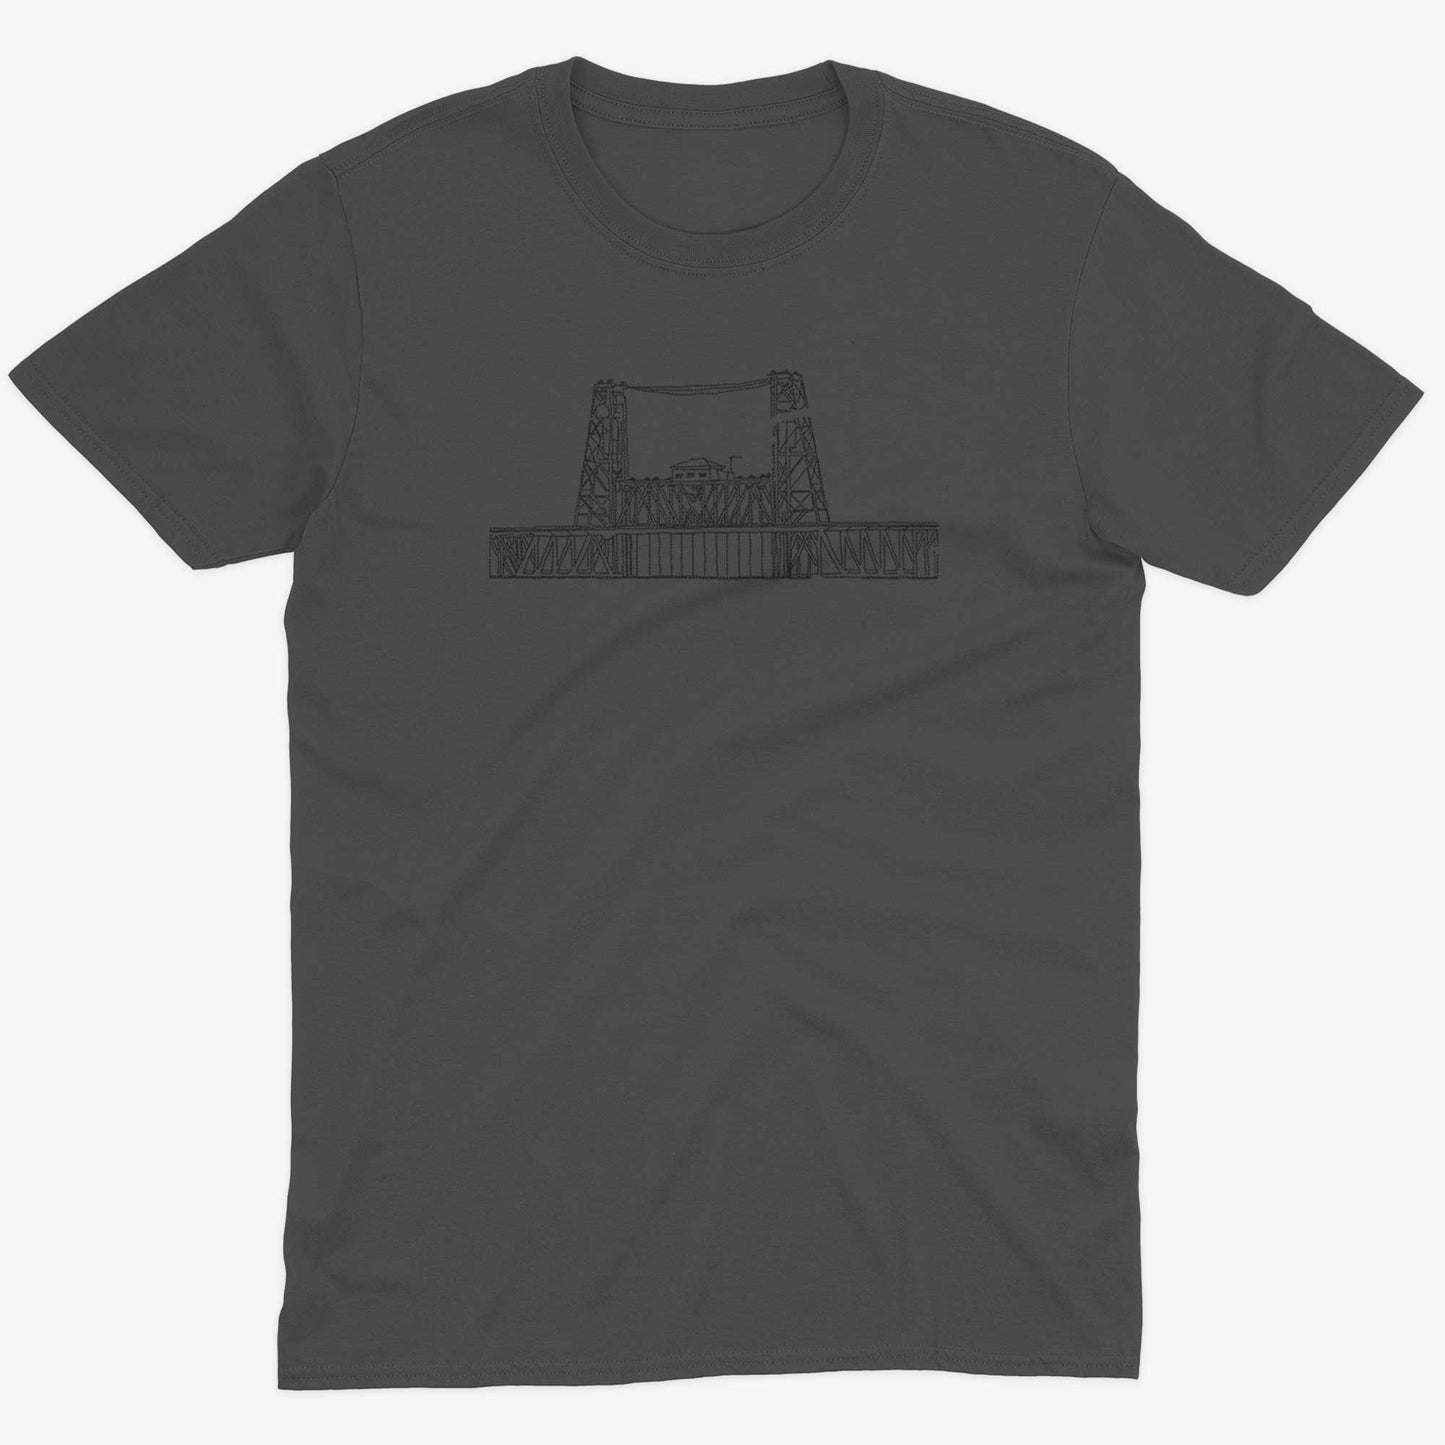 Steel Bridge Unisex Or Women's Cotton T-shirt-Asphalt-Unisex